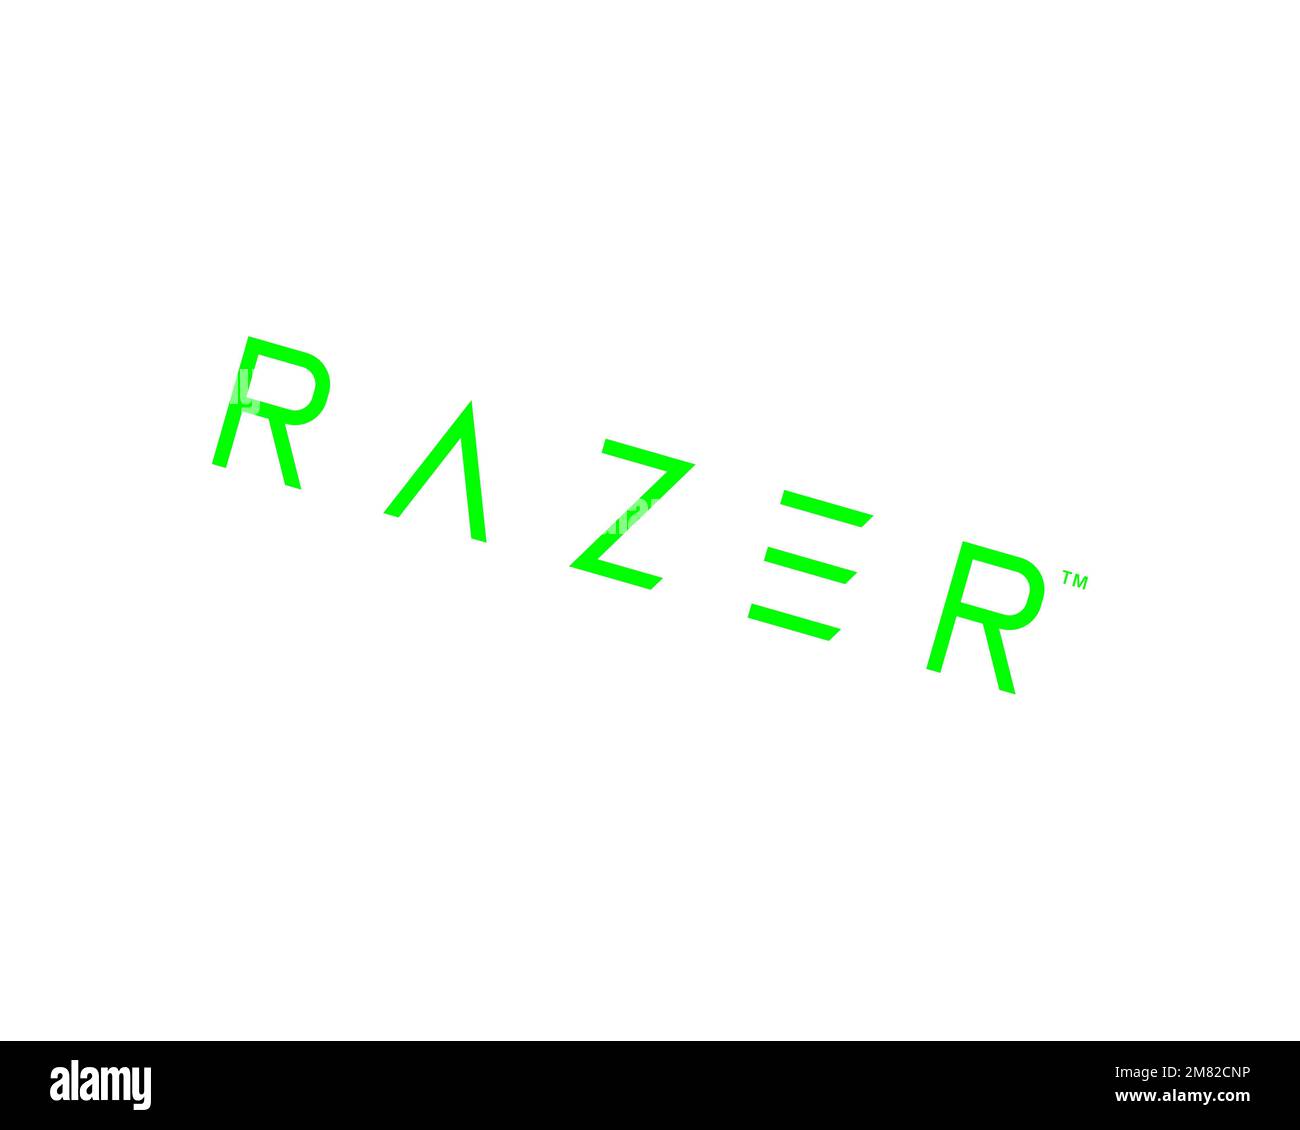 razer logo white background